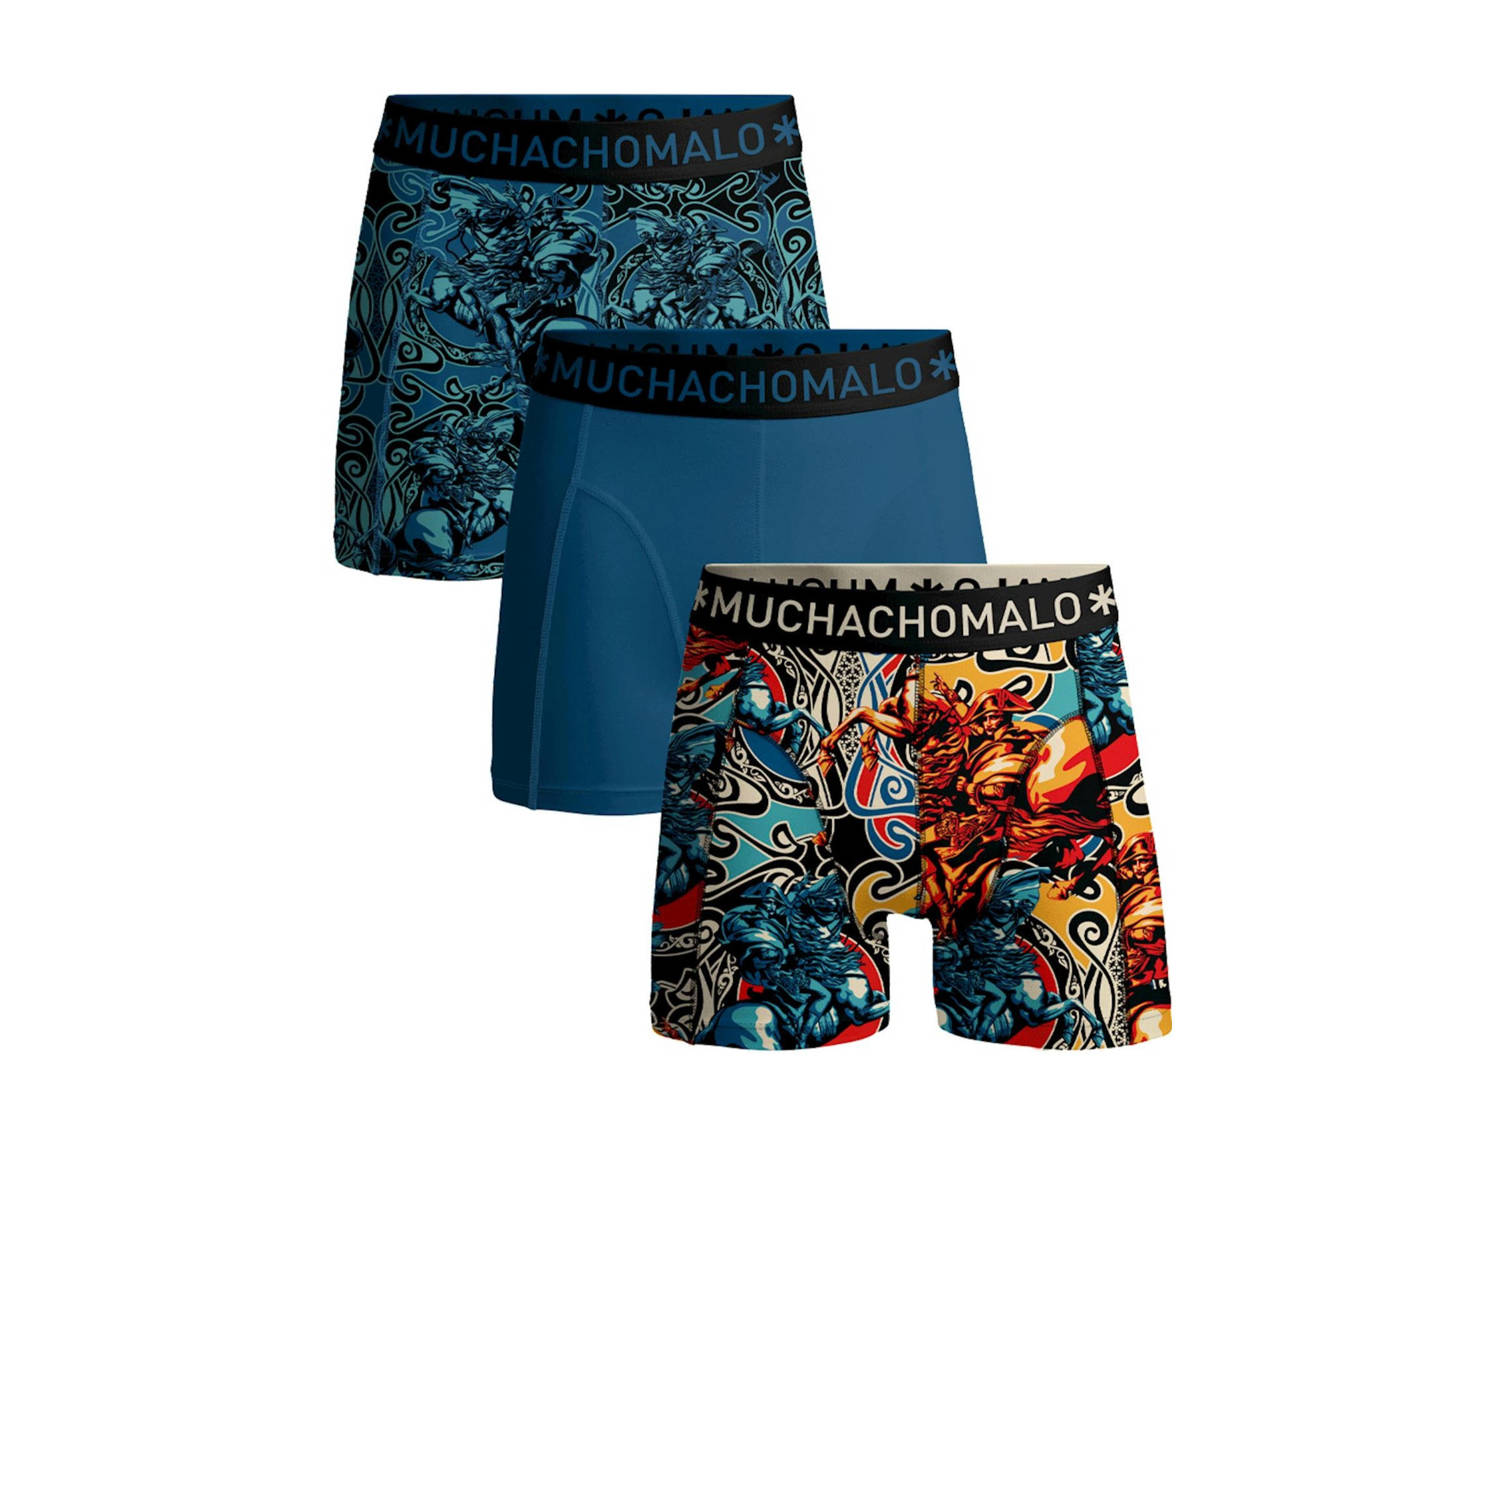 Muchachomalo boxershort ALPS set van 3 blauw multi Stretchkatoen All over print 158 164